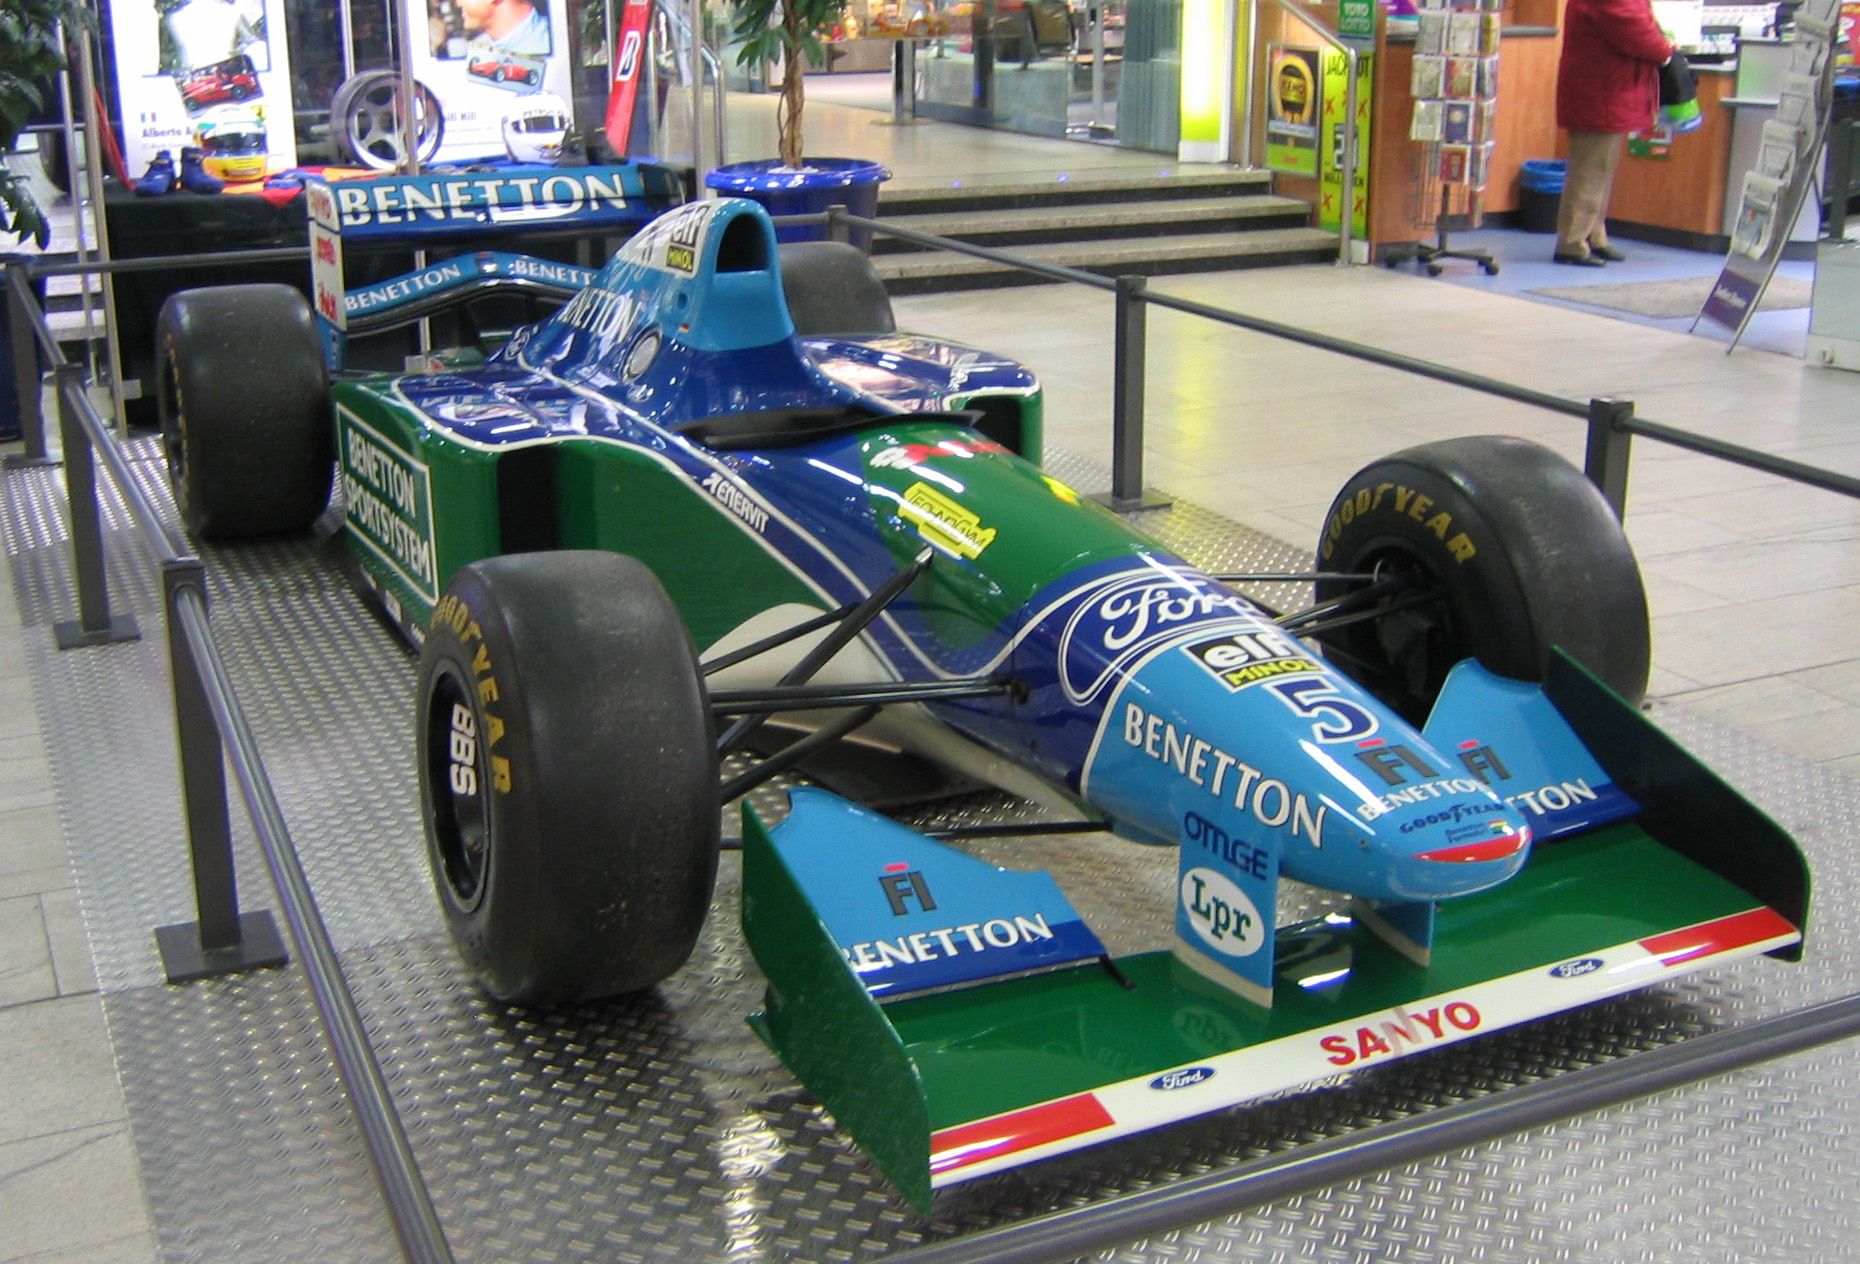 The 1994 Benetton F1 car on display